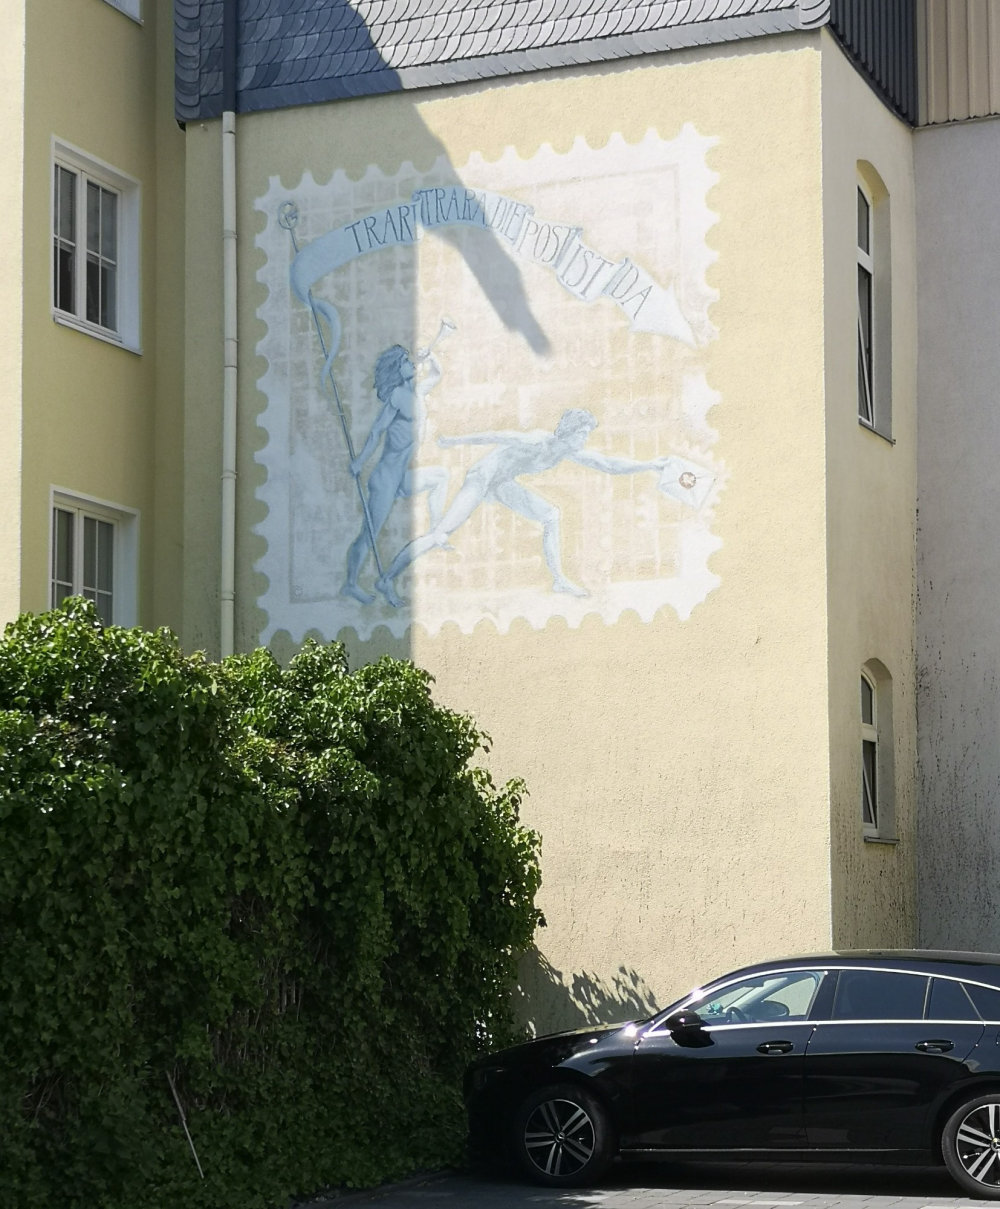 mural in Bad Harzburg by artist unknown.